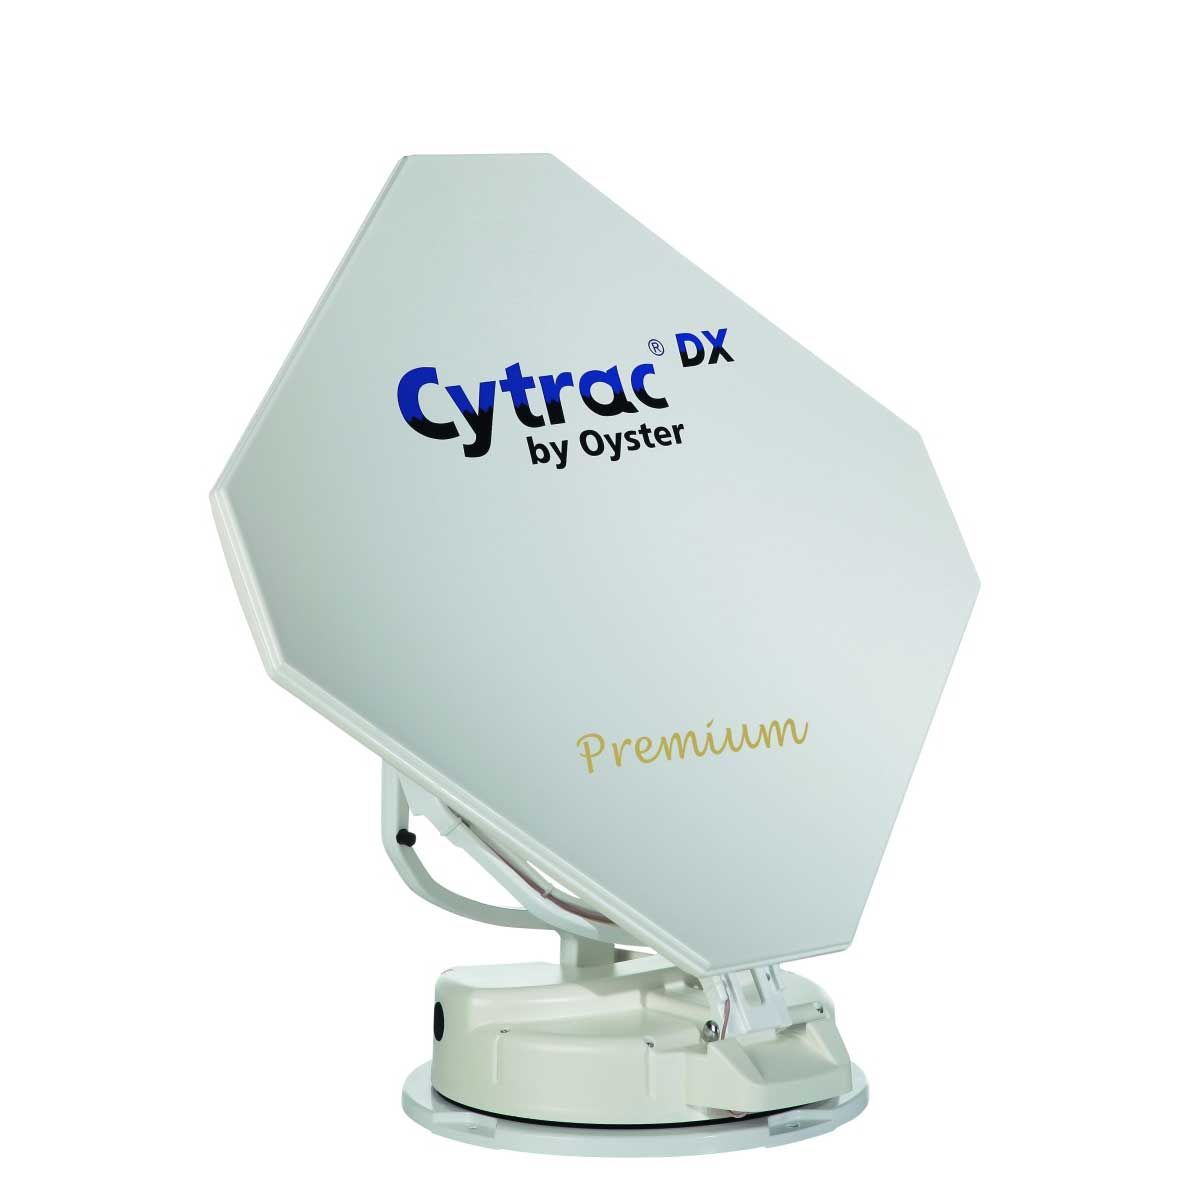 TEN HAAFT Cytrac DX Premium Twin mit Smart TV 32 Zoll - 10043231 10046445